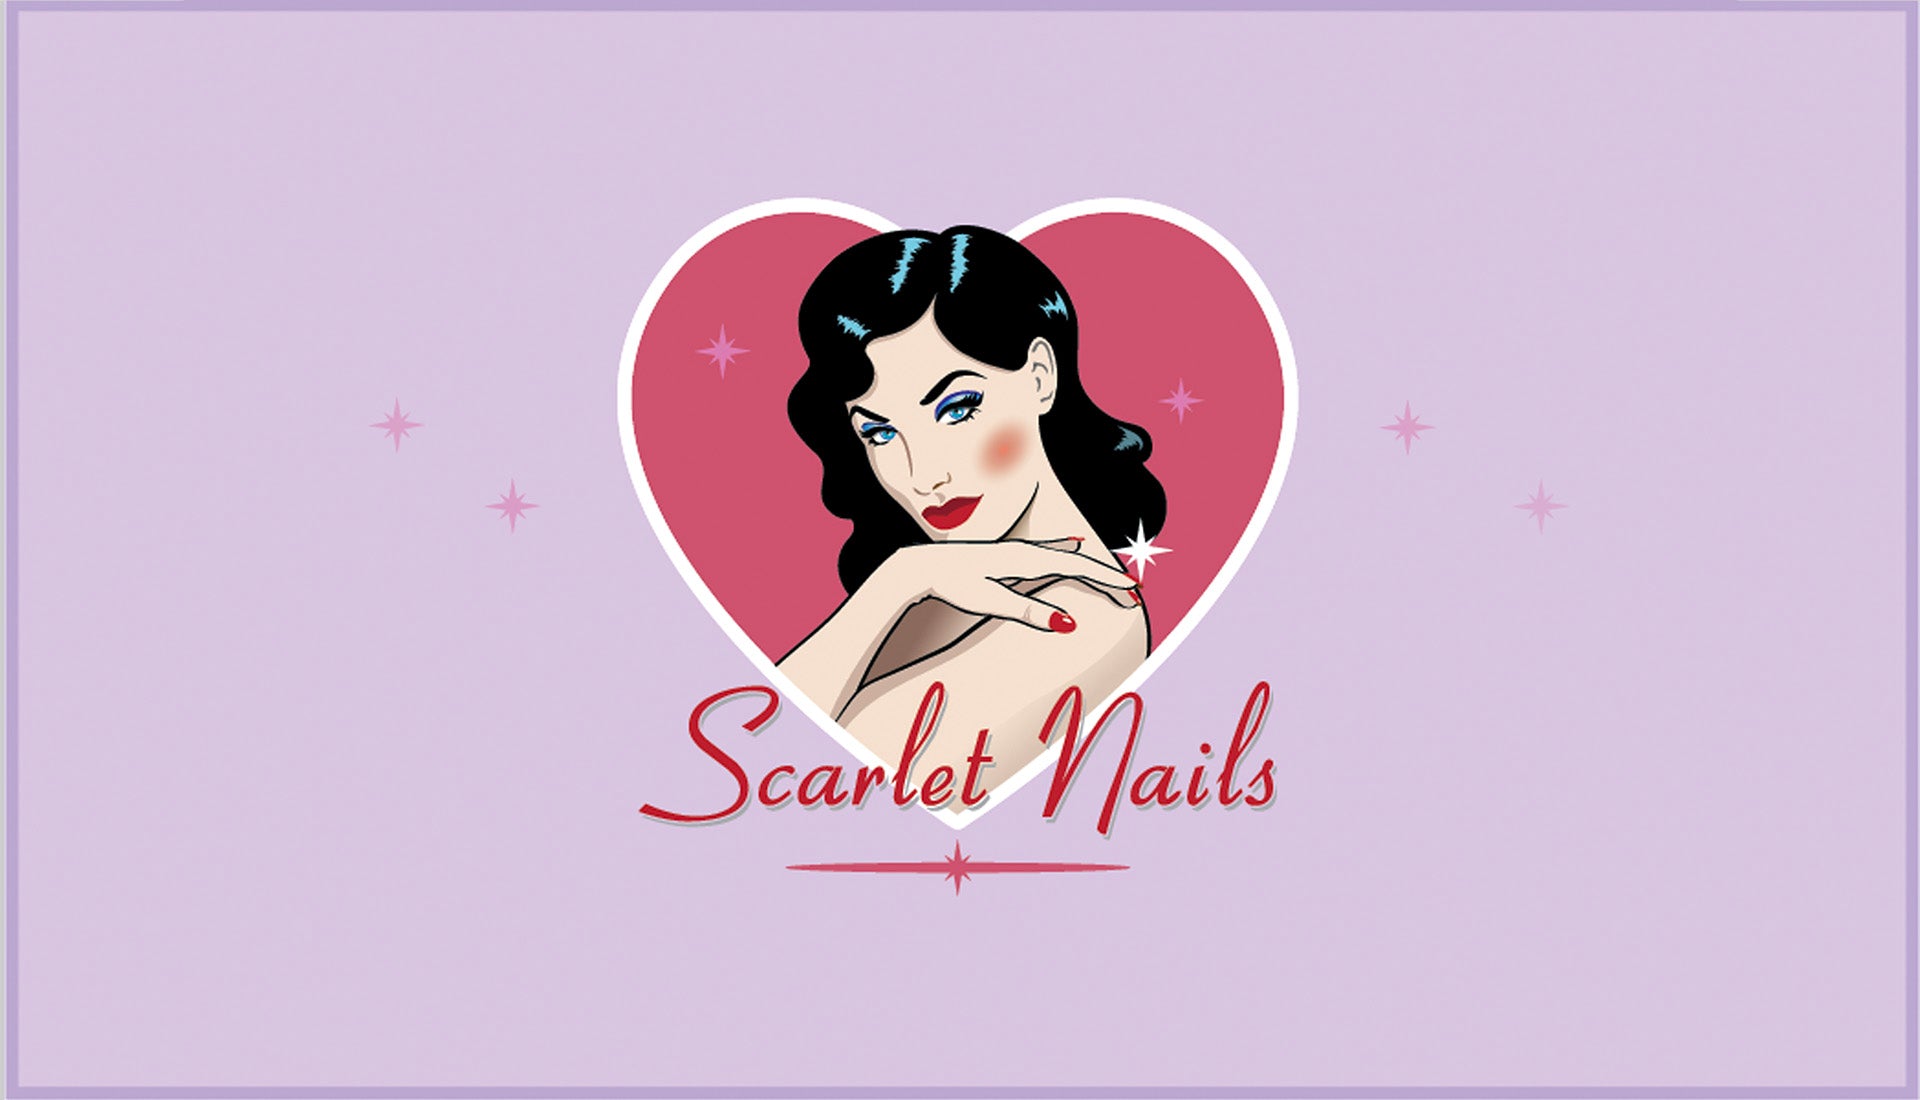 Scarlet-nails-logo